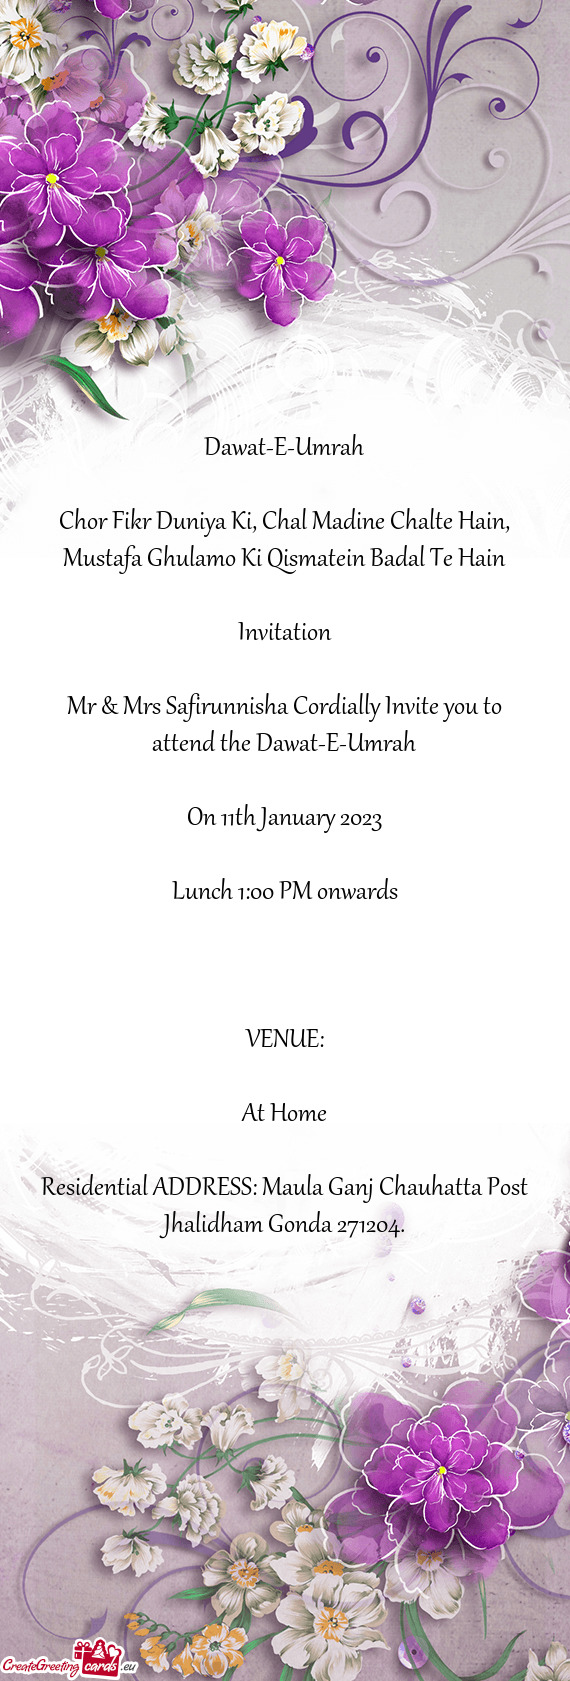 Mr & Mrs Safirunnisha Cordially Invite you to attend the Dawat-E-Umrah